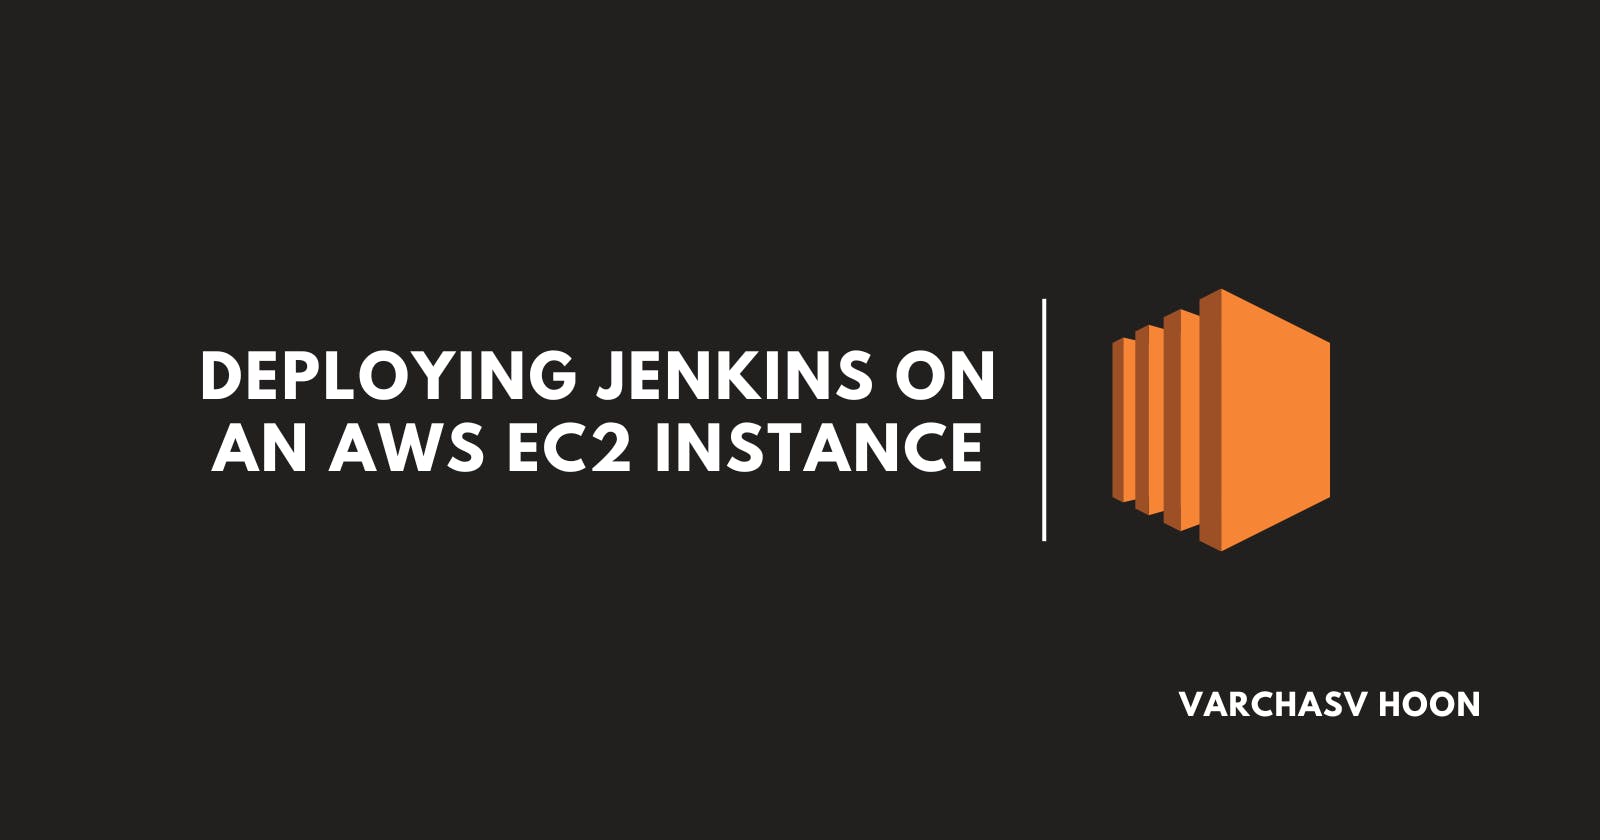 Deploying Jenkins on an AWS EC2 instance